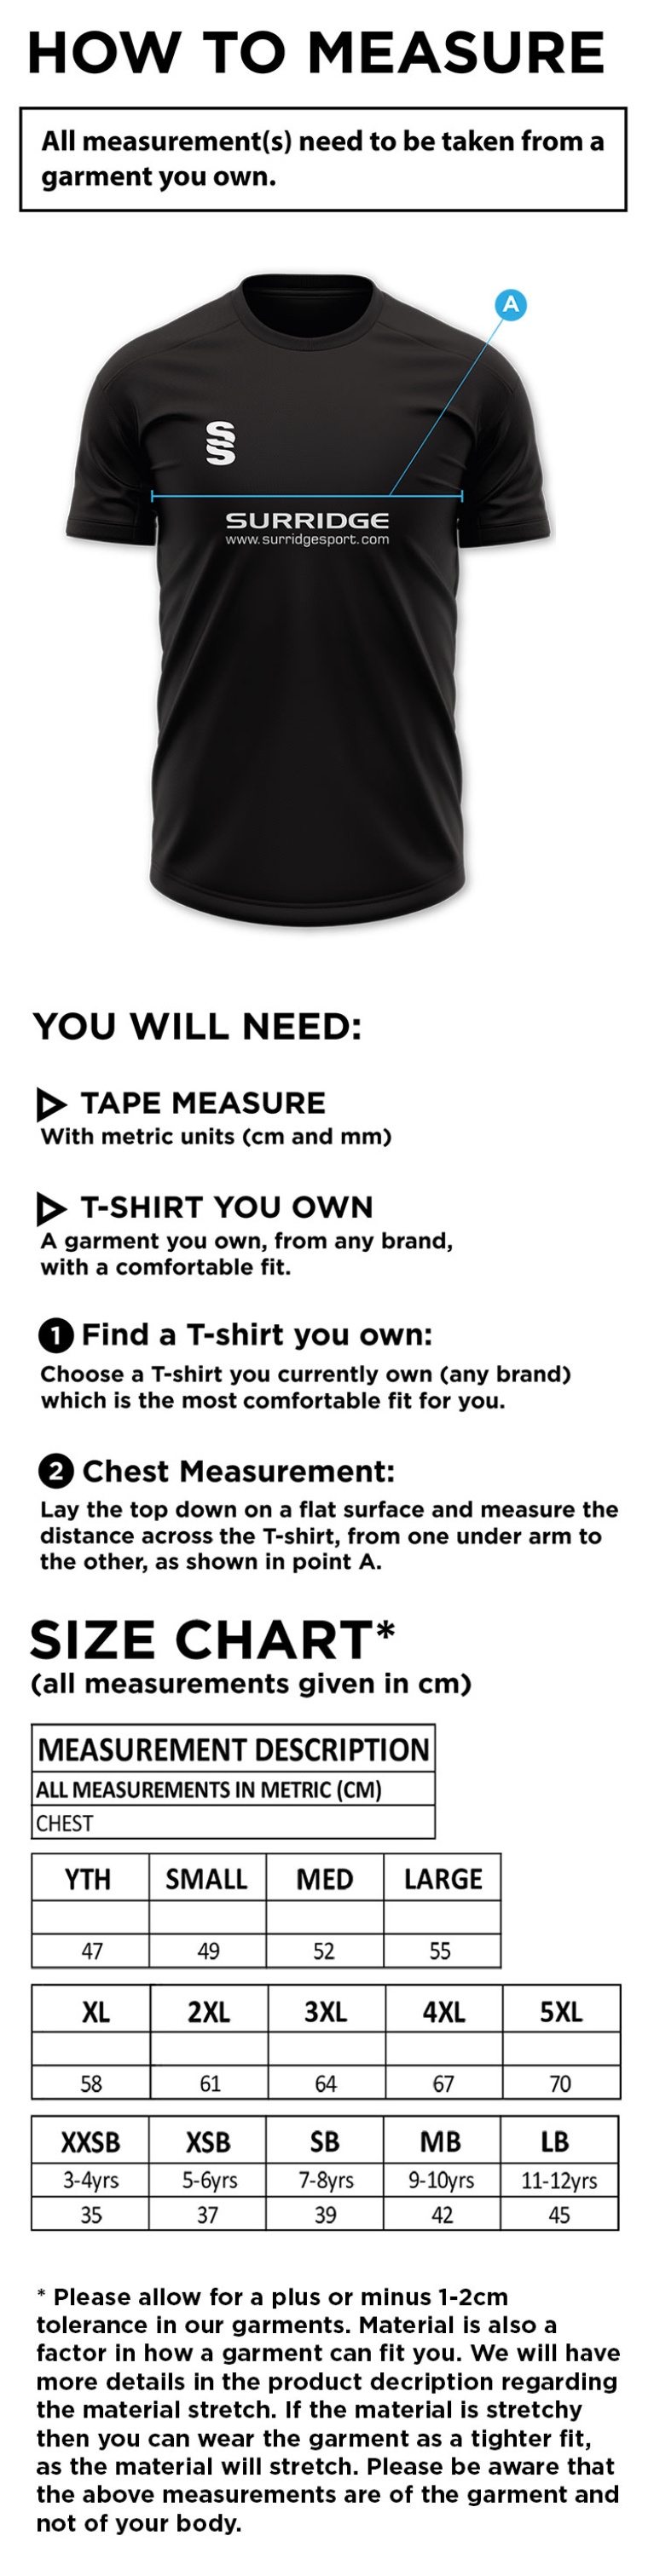 Women's Blade Polo Shirt : Black/Emerald/White - Size Guide